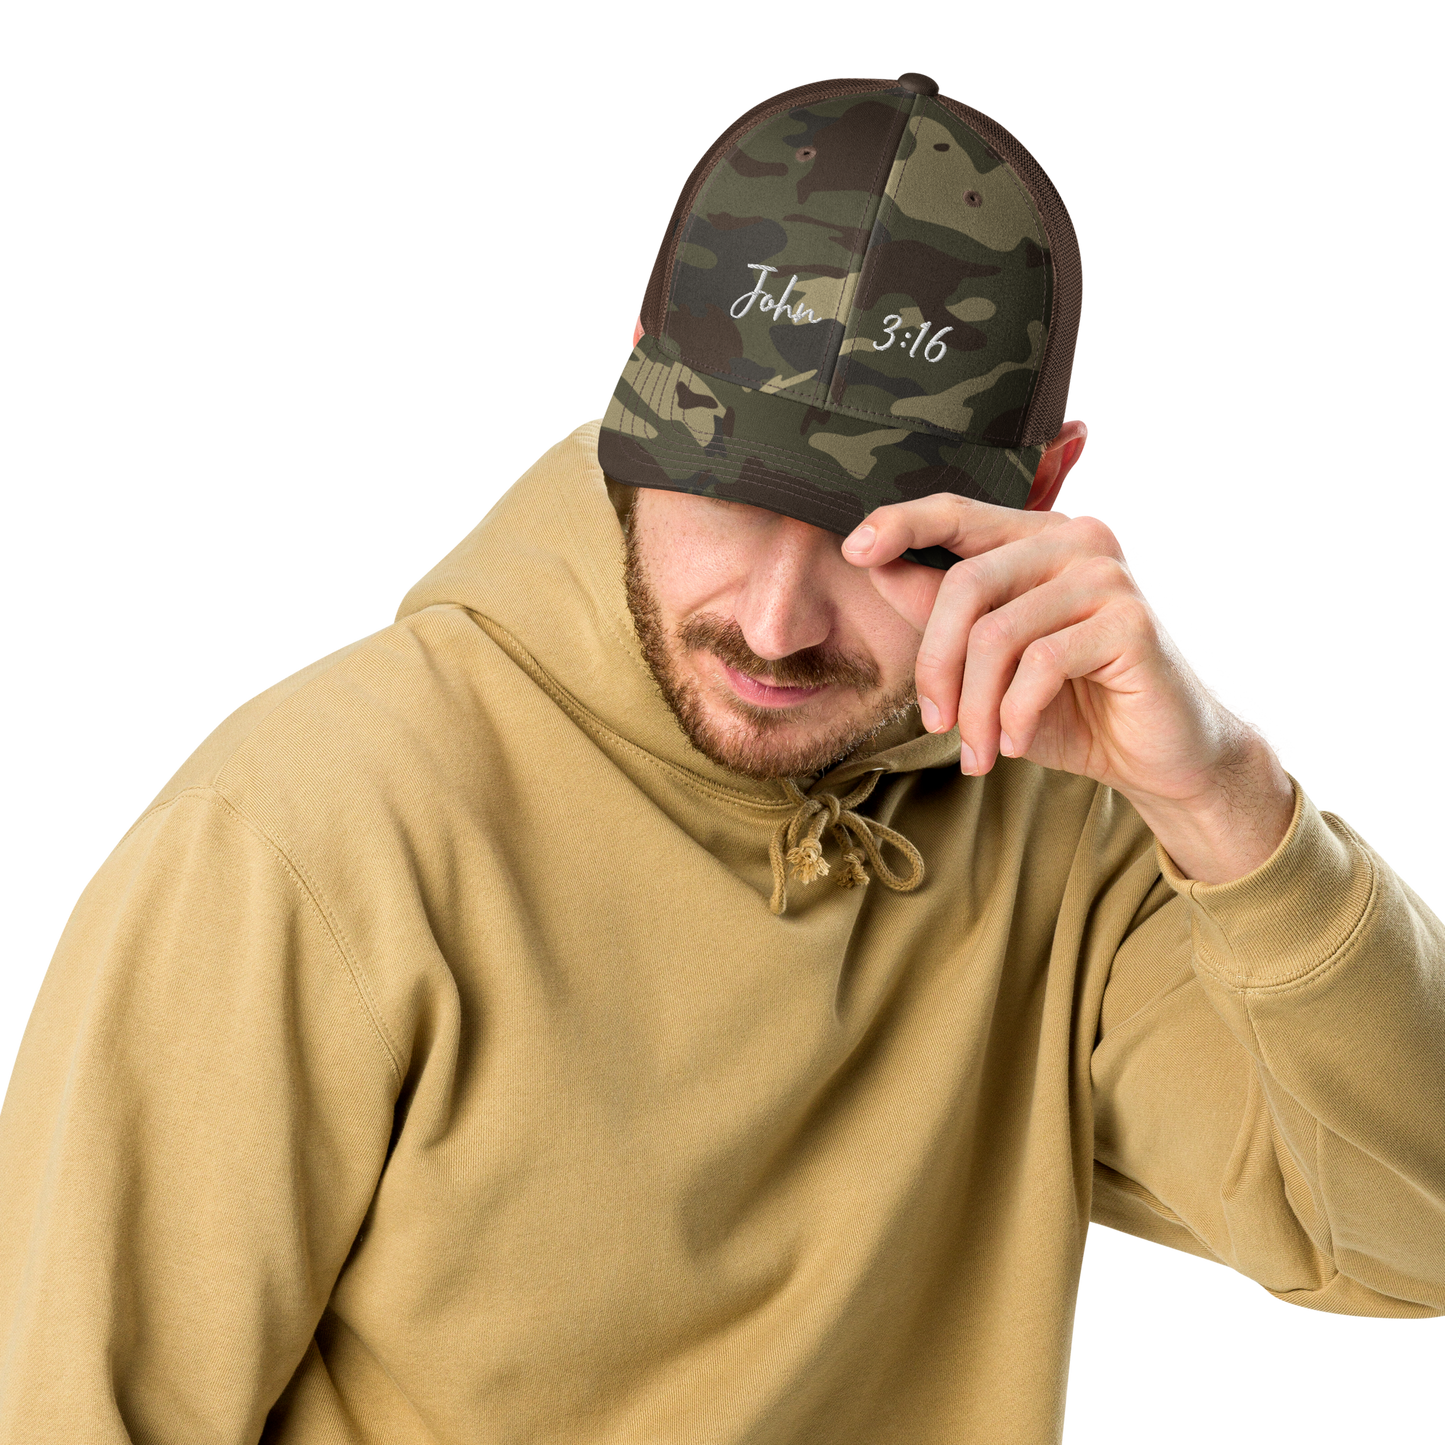 John 3:16 Camouflage Hat